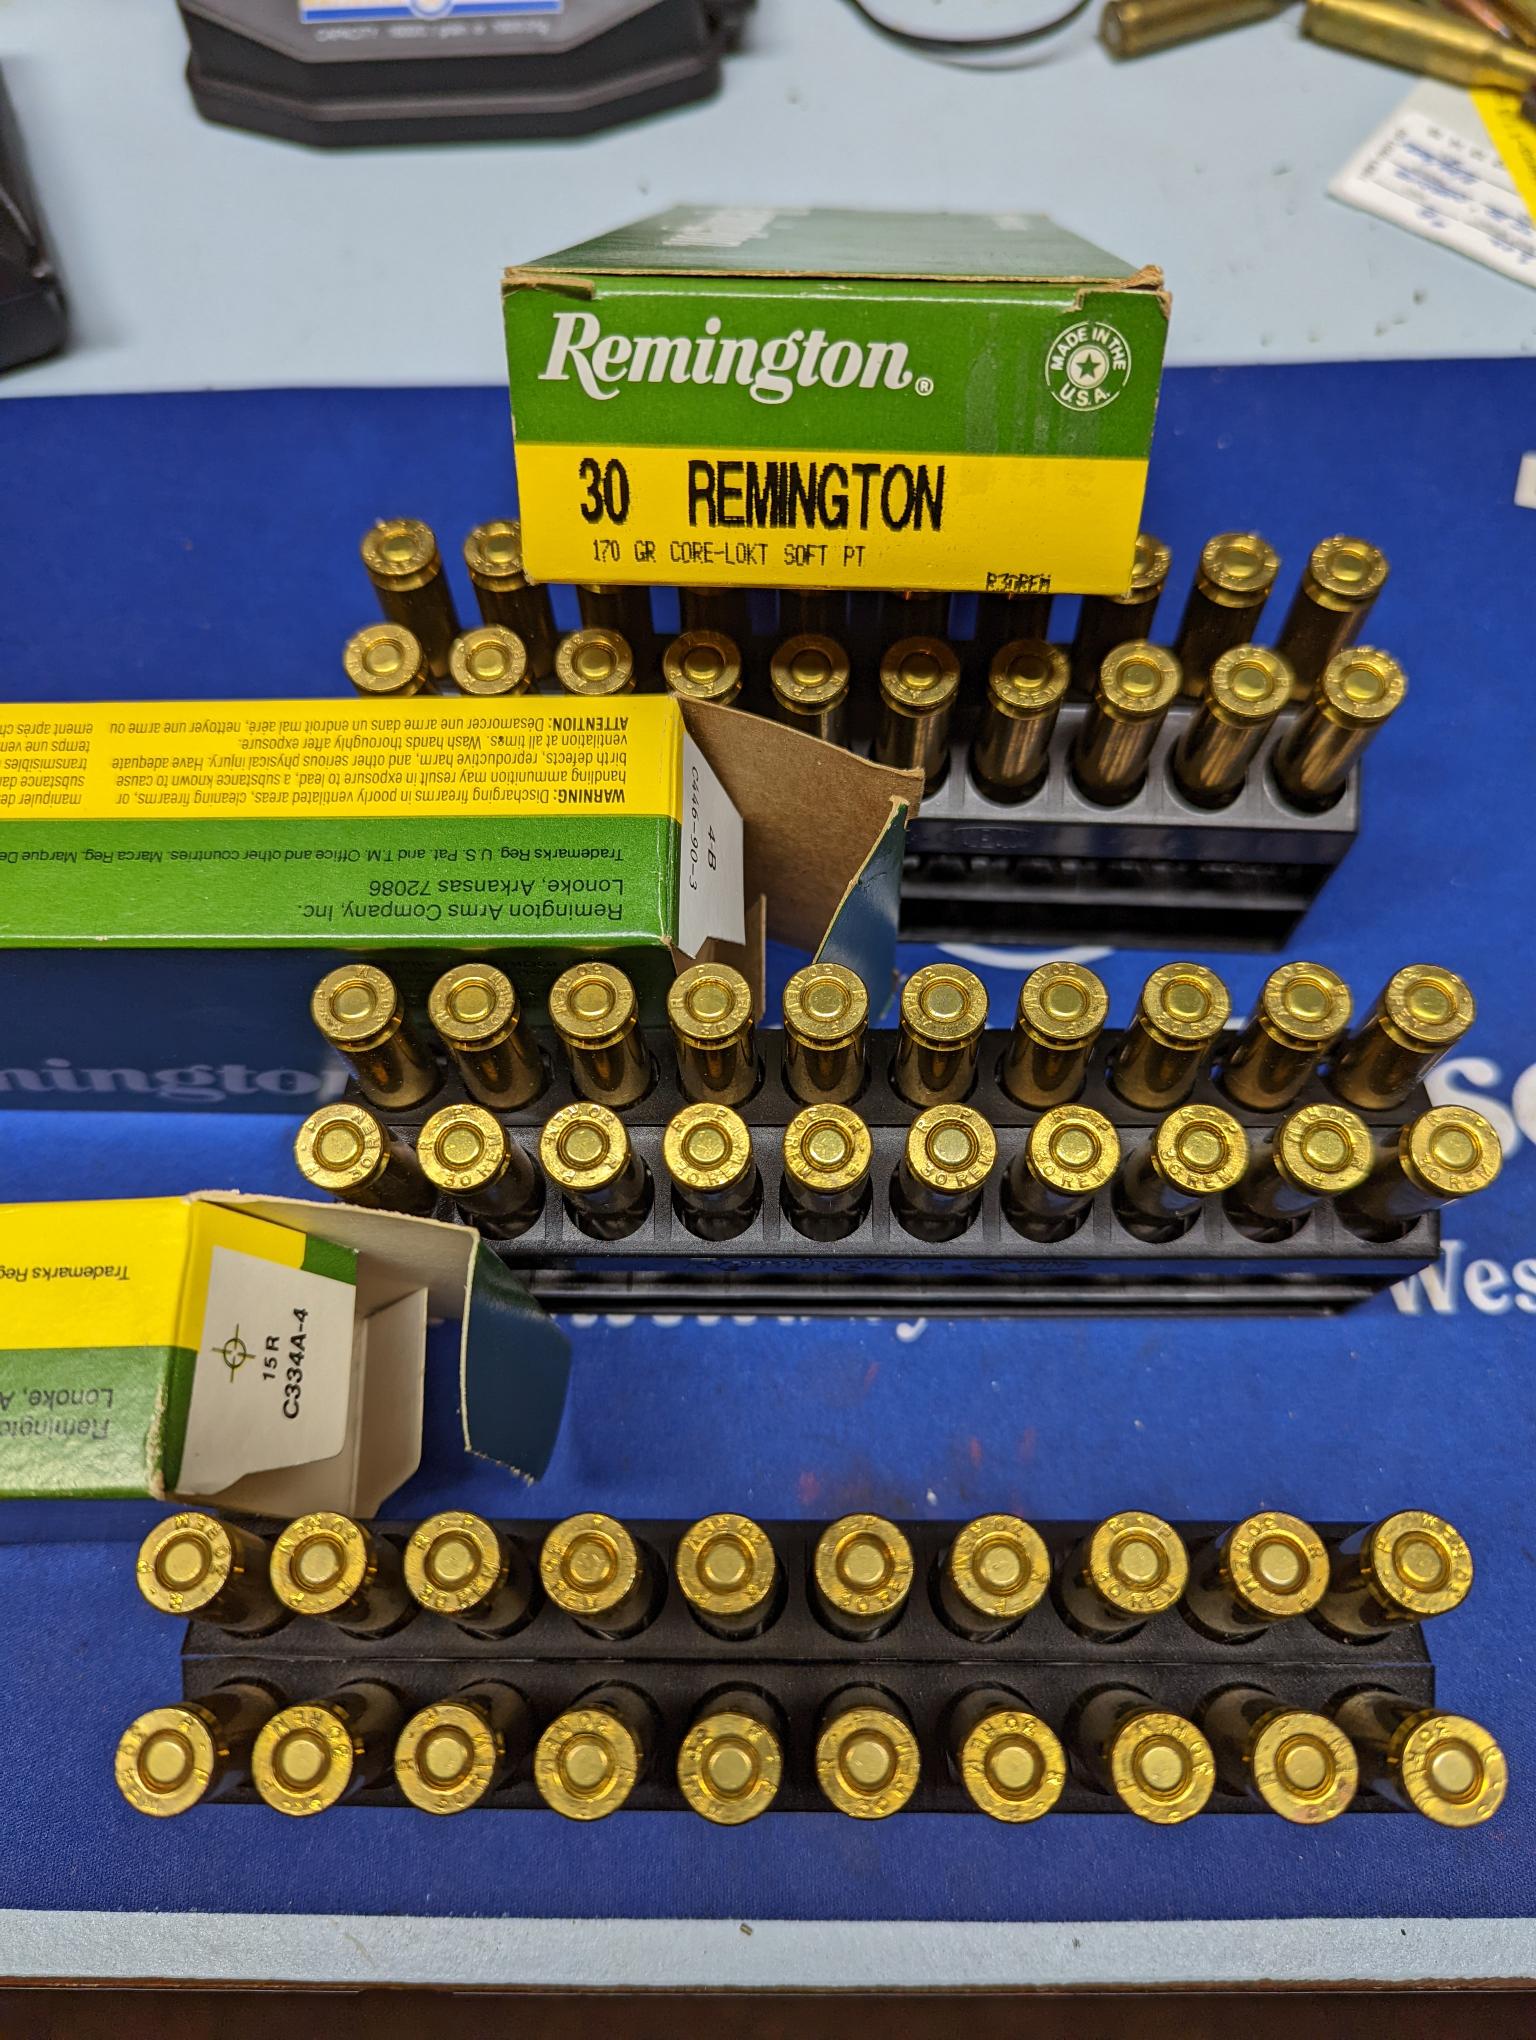 30 Remington ammo.jpg